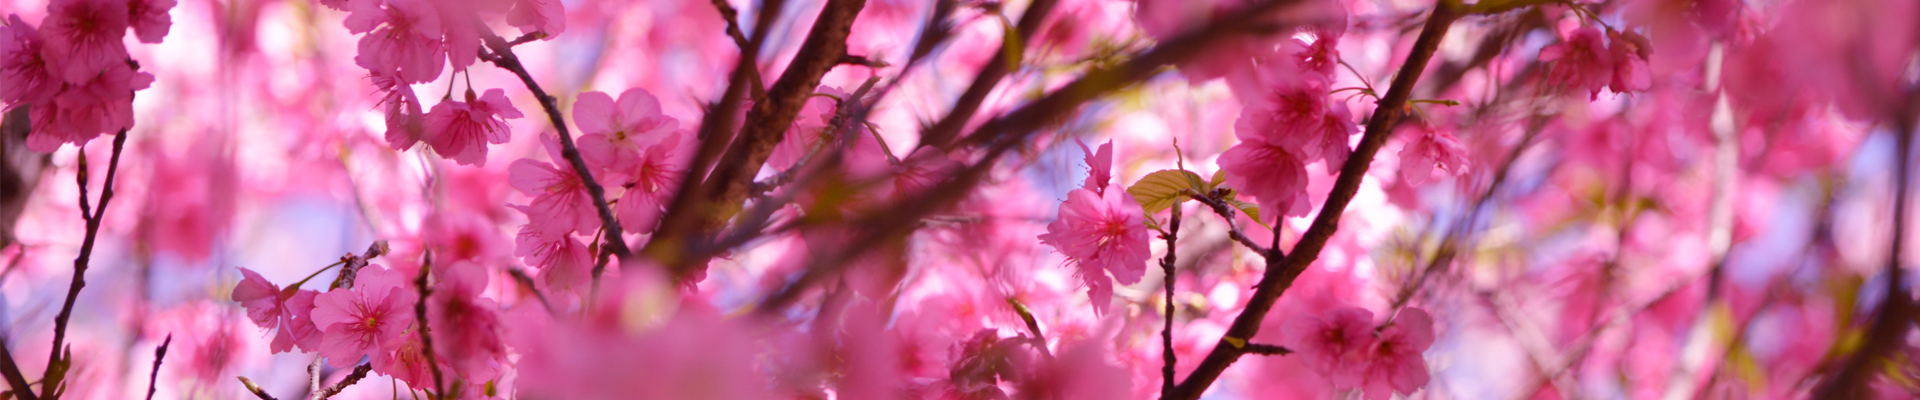 Flowers horizon pink